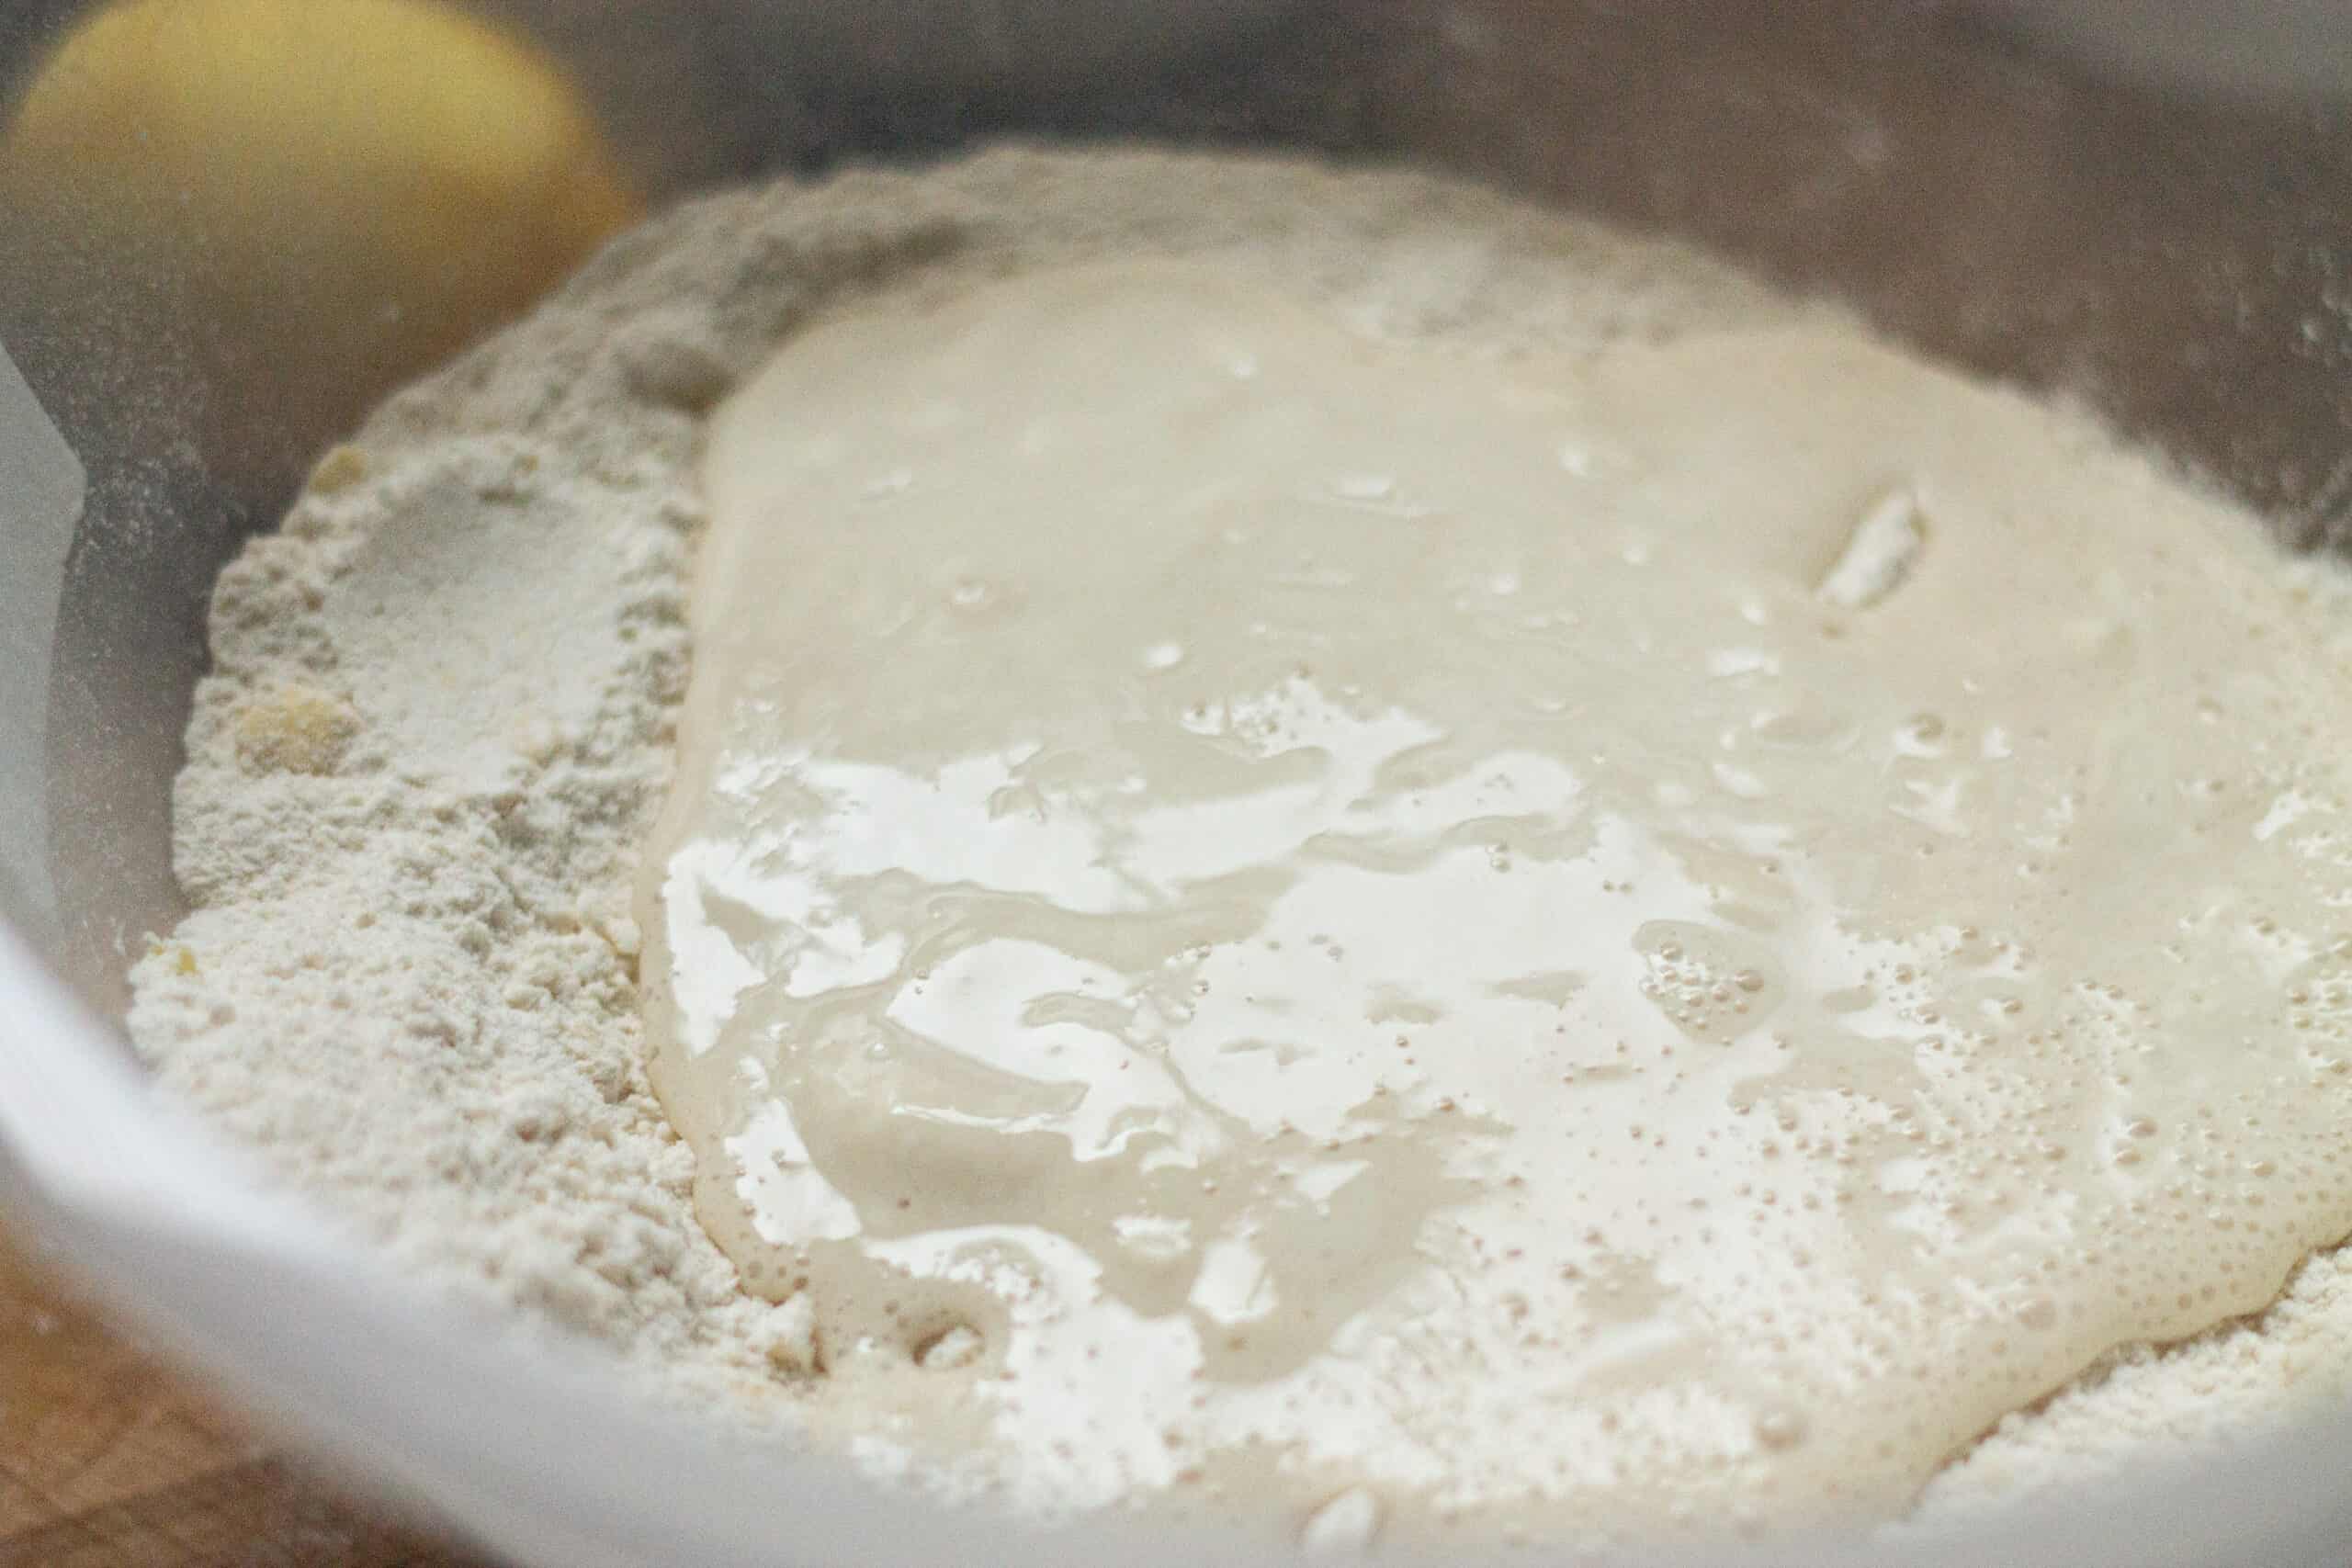 Adding yeast to flour